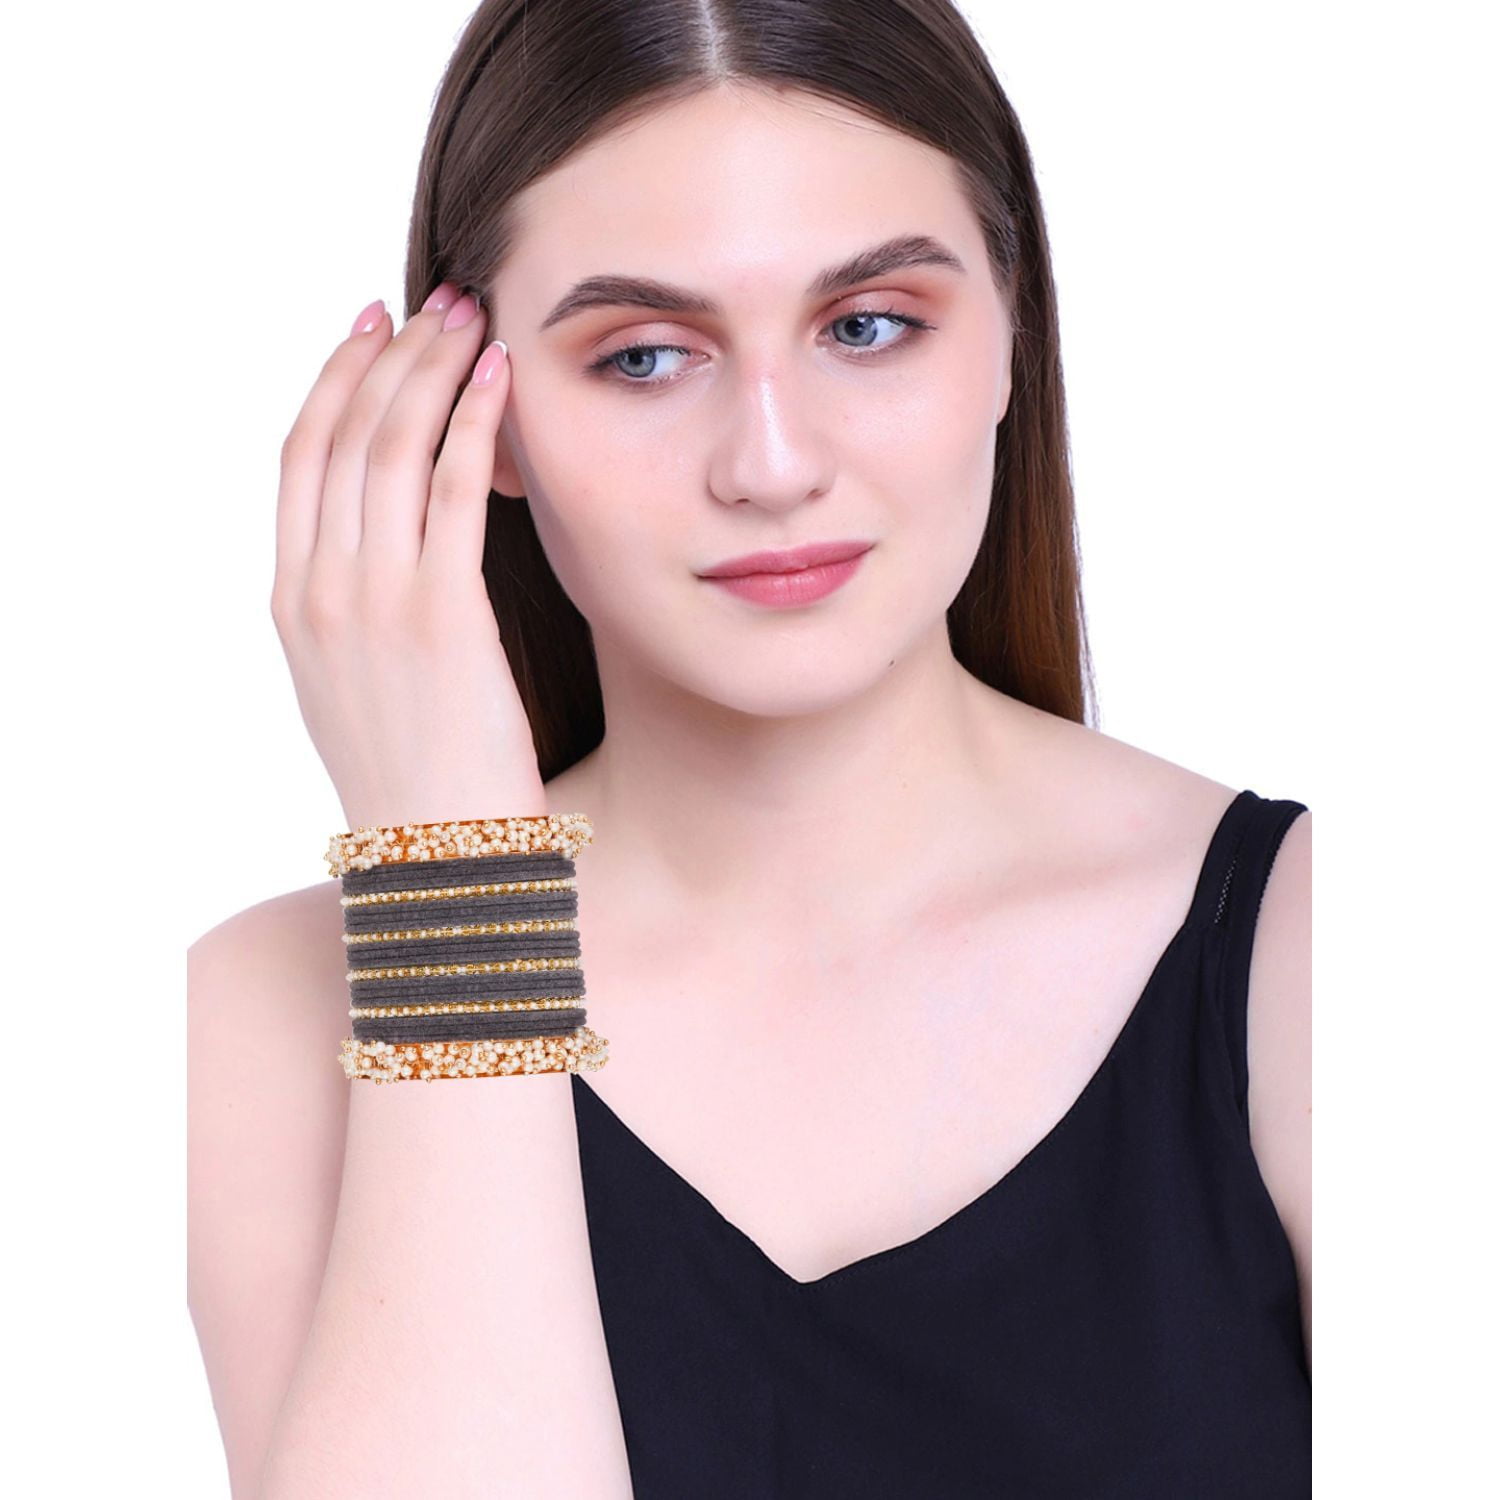 Cartier 18K Yellow Gold Love Bracelet Size 17 – QUEEN MAY